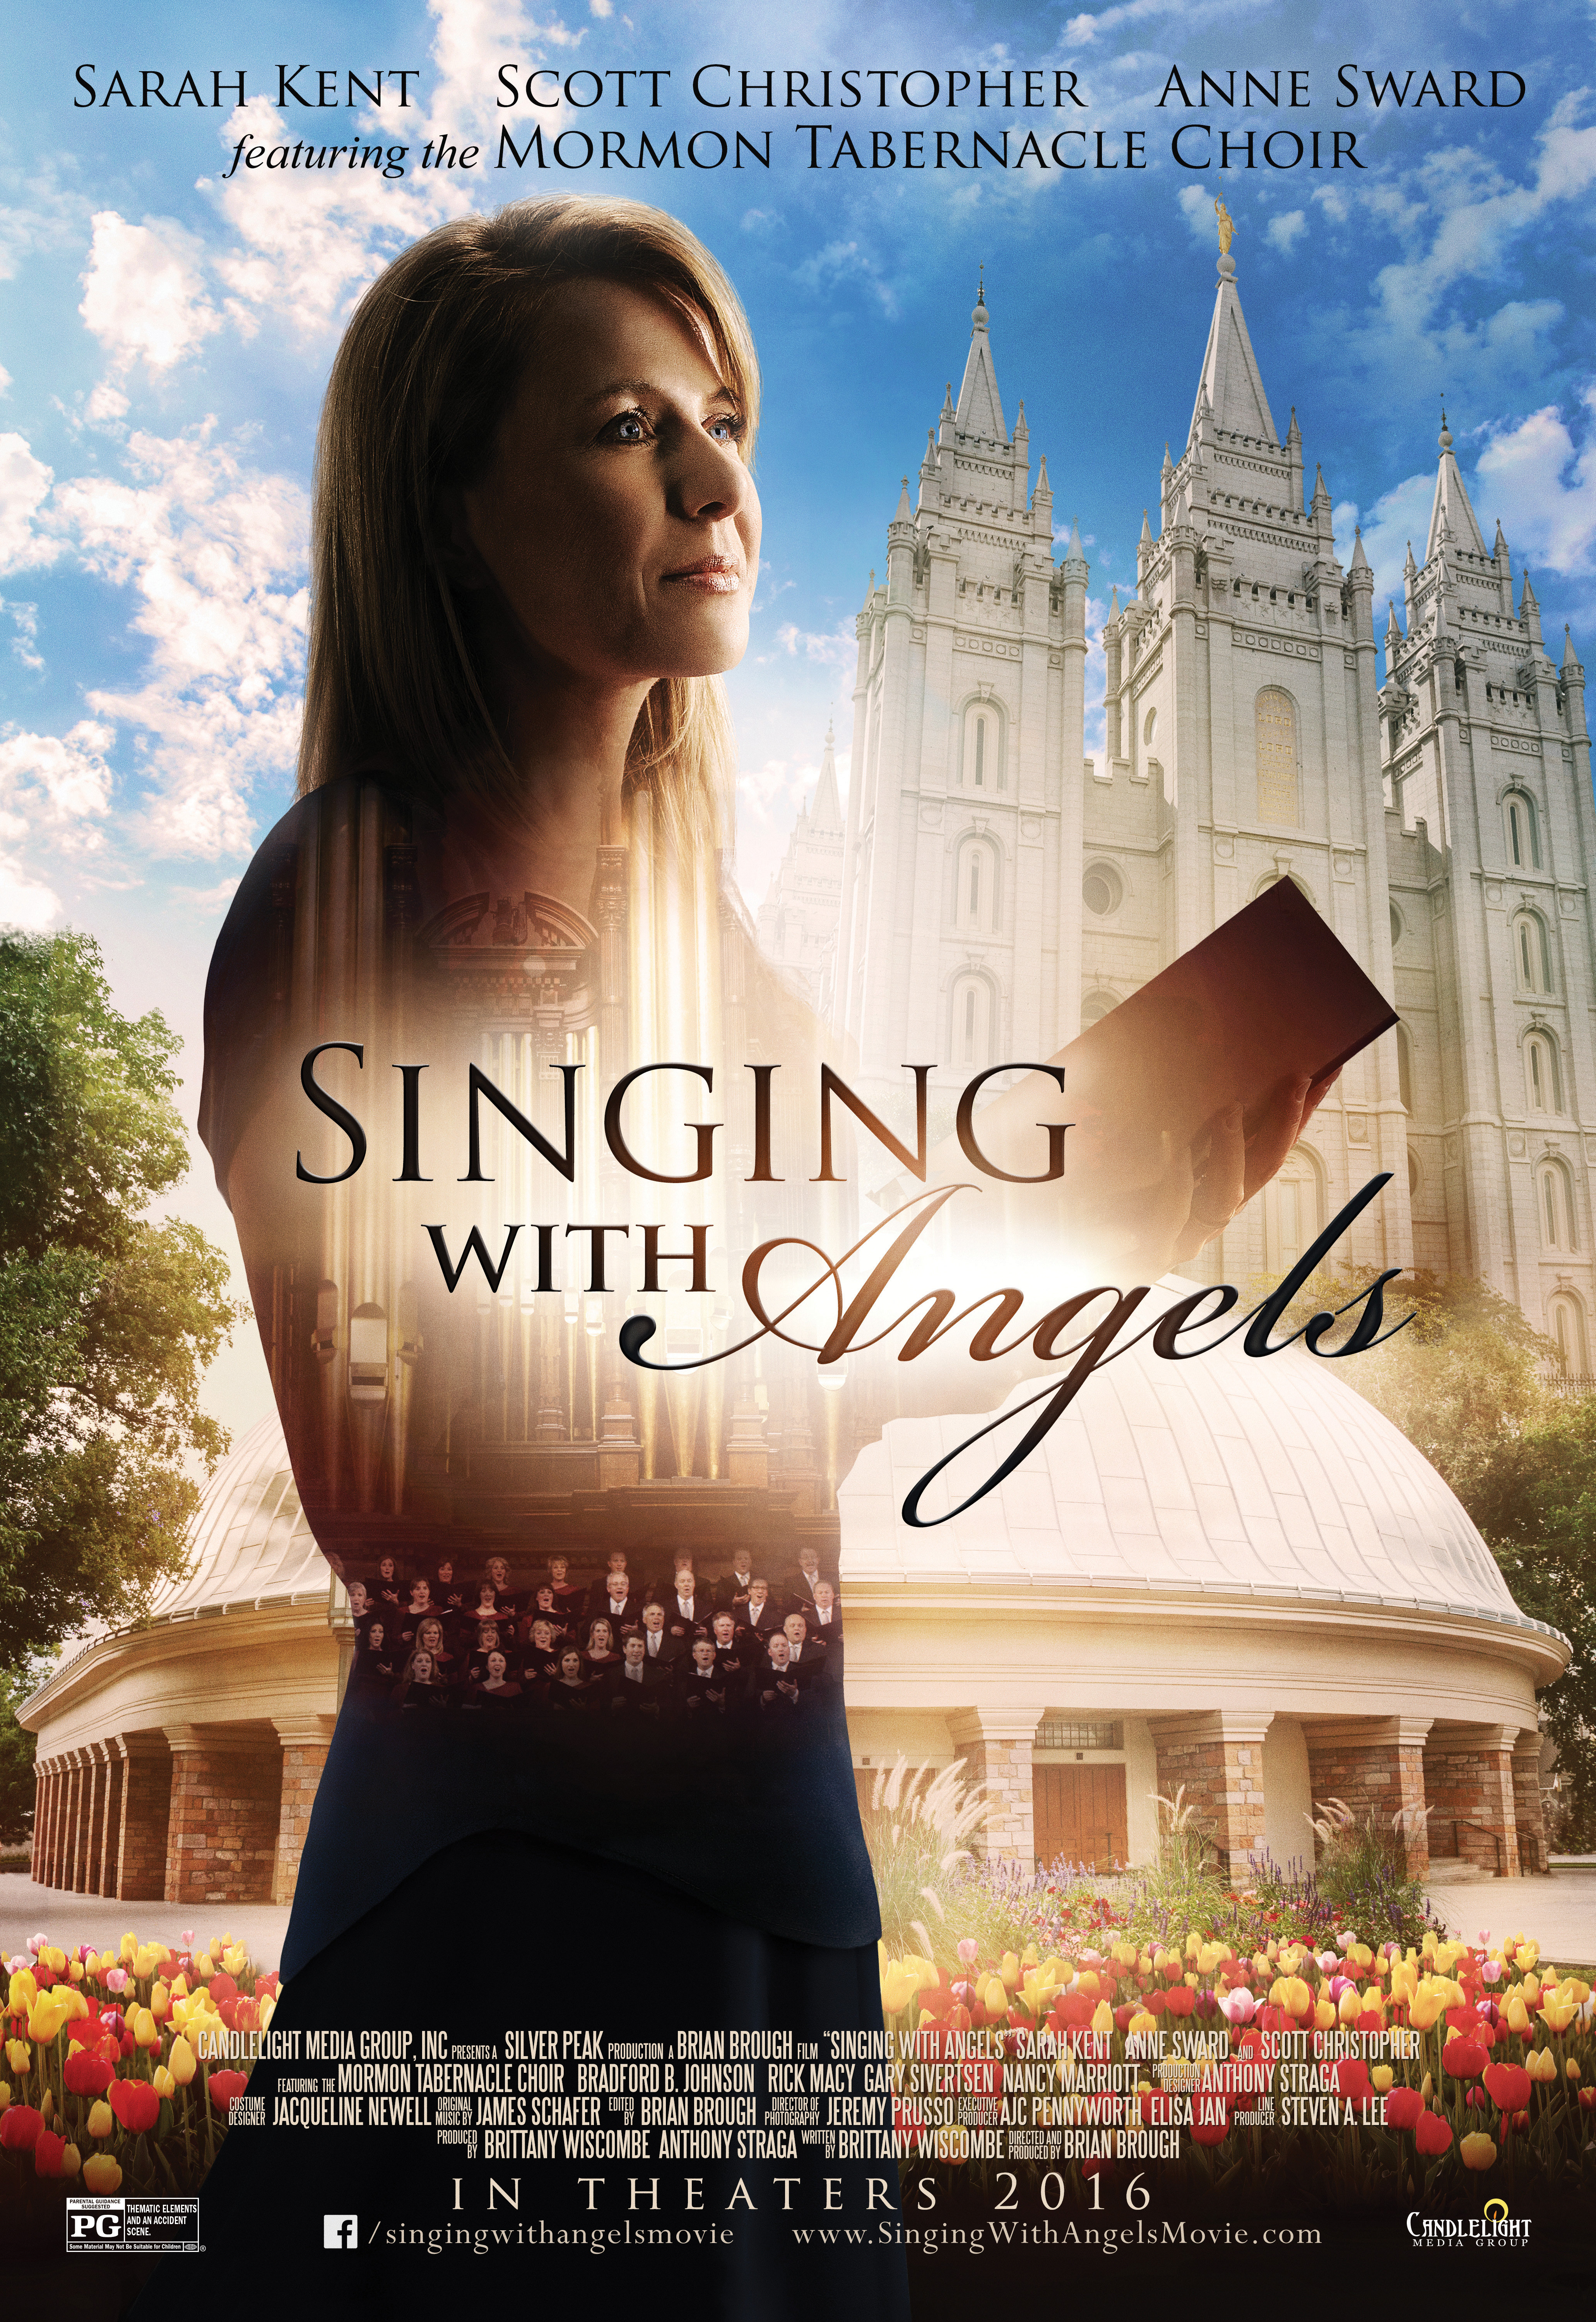 Nonton film Singing with Angels layarkaca21 indoxx1 ganool online streaming terbaru